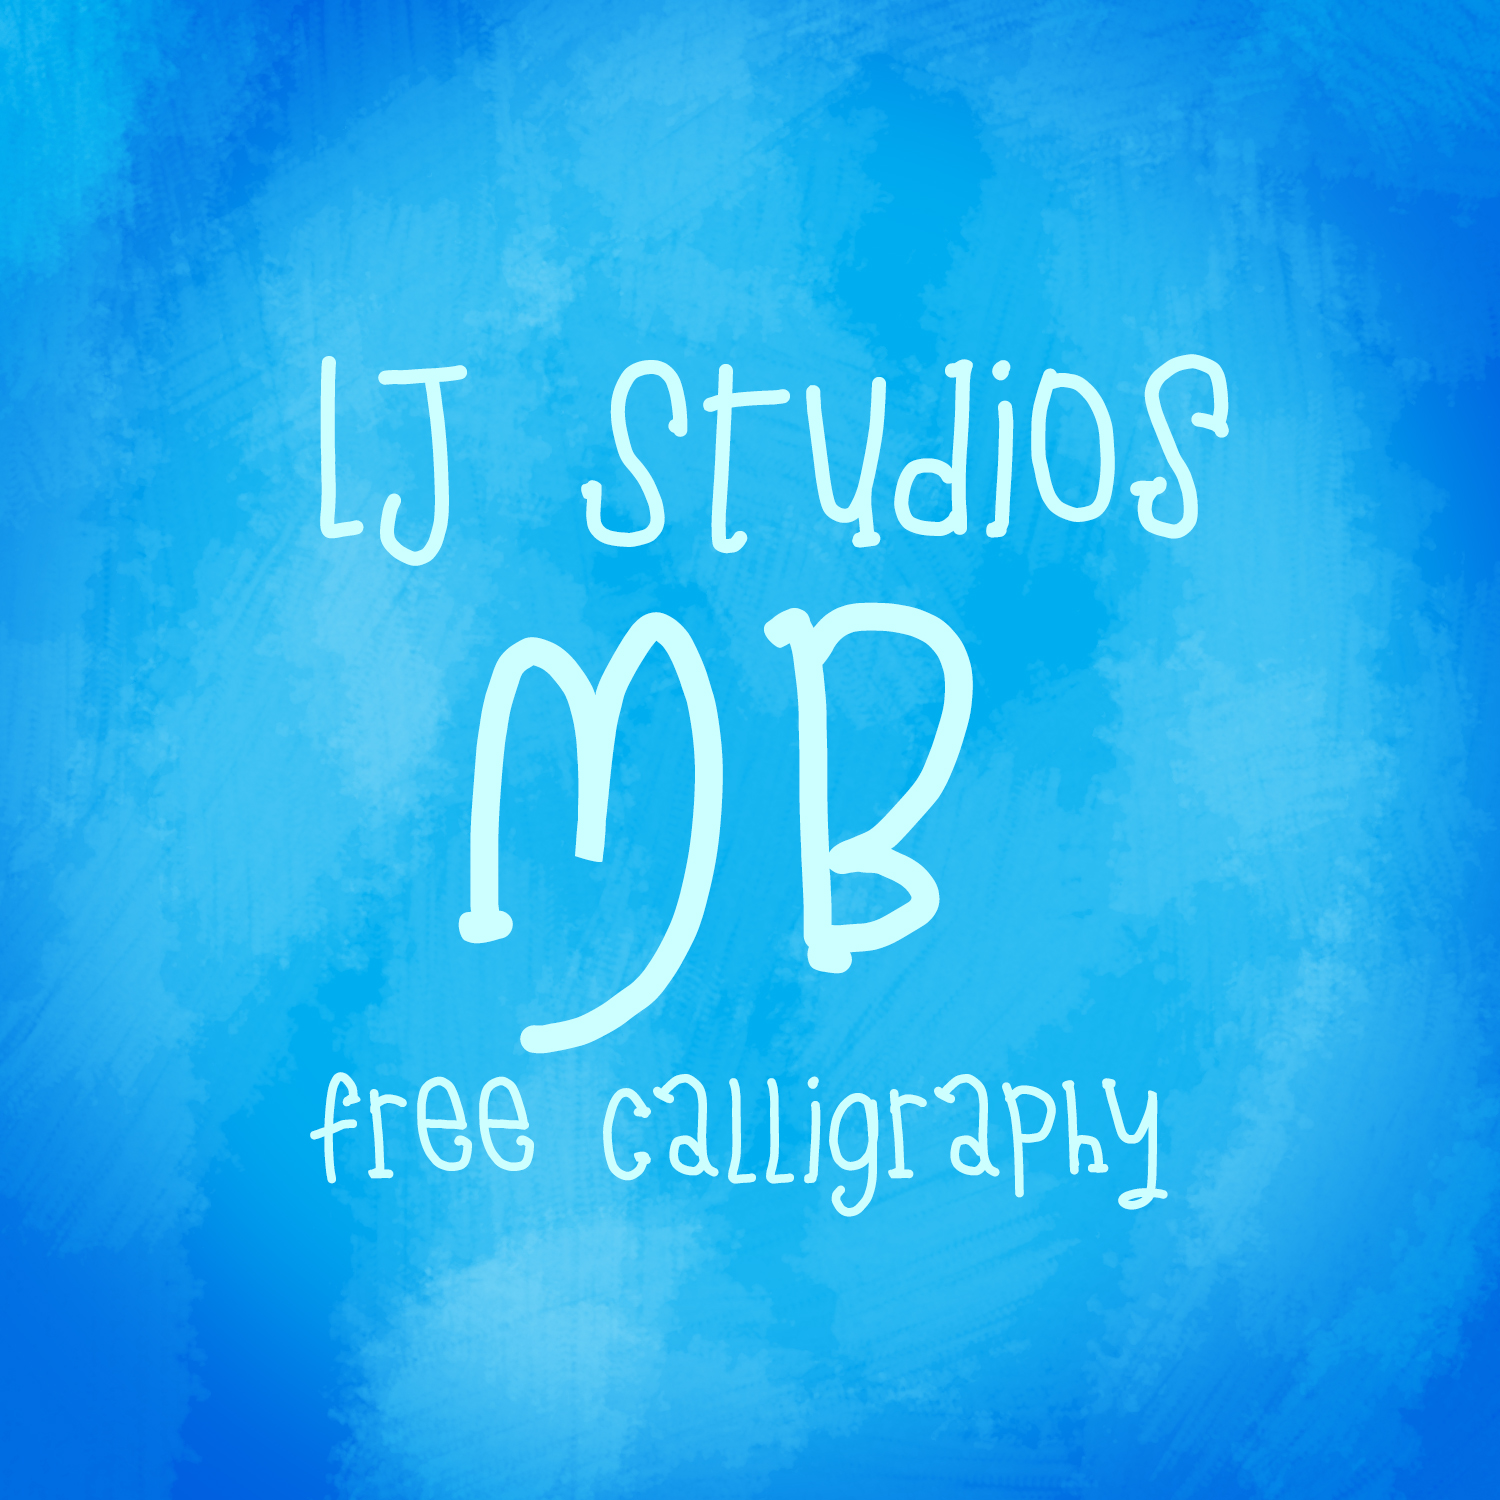 LJ Studios MB